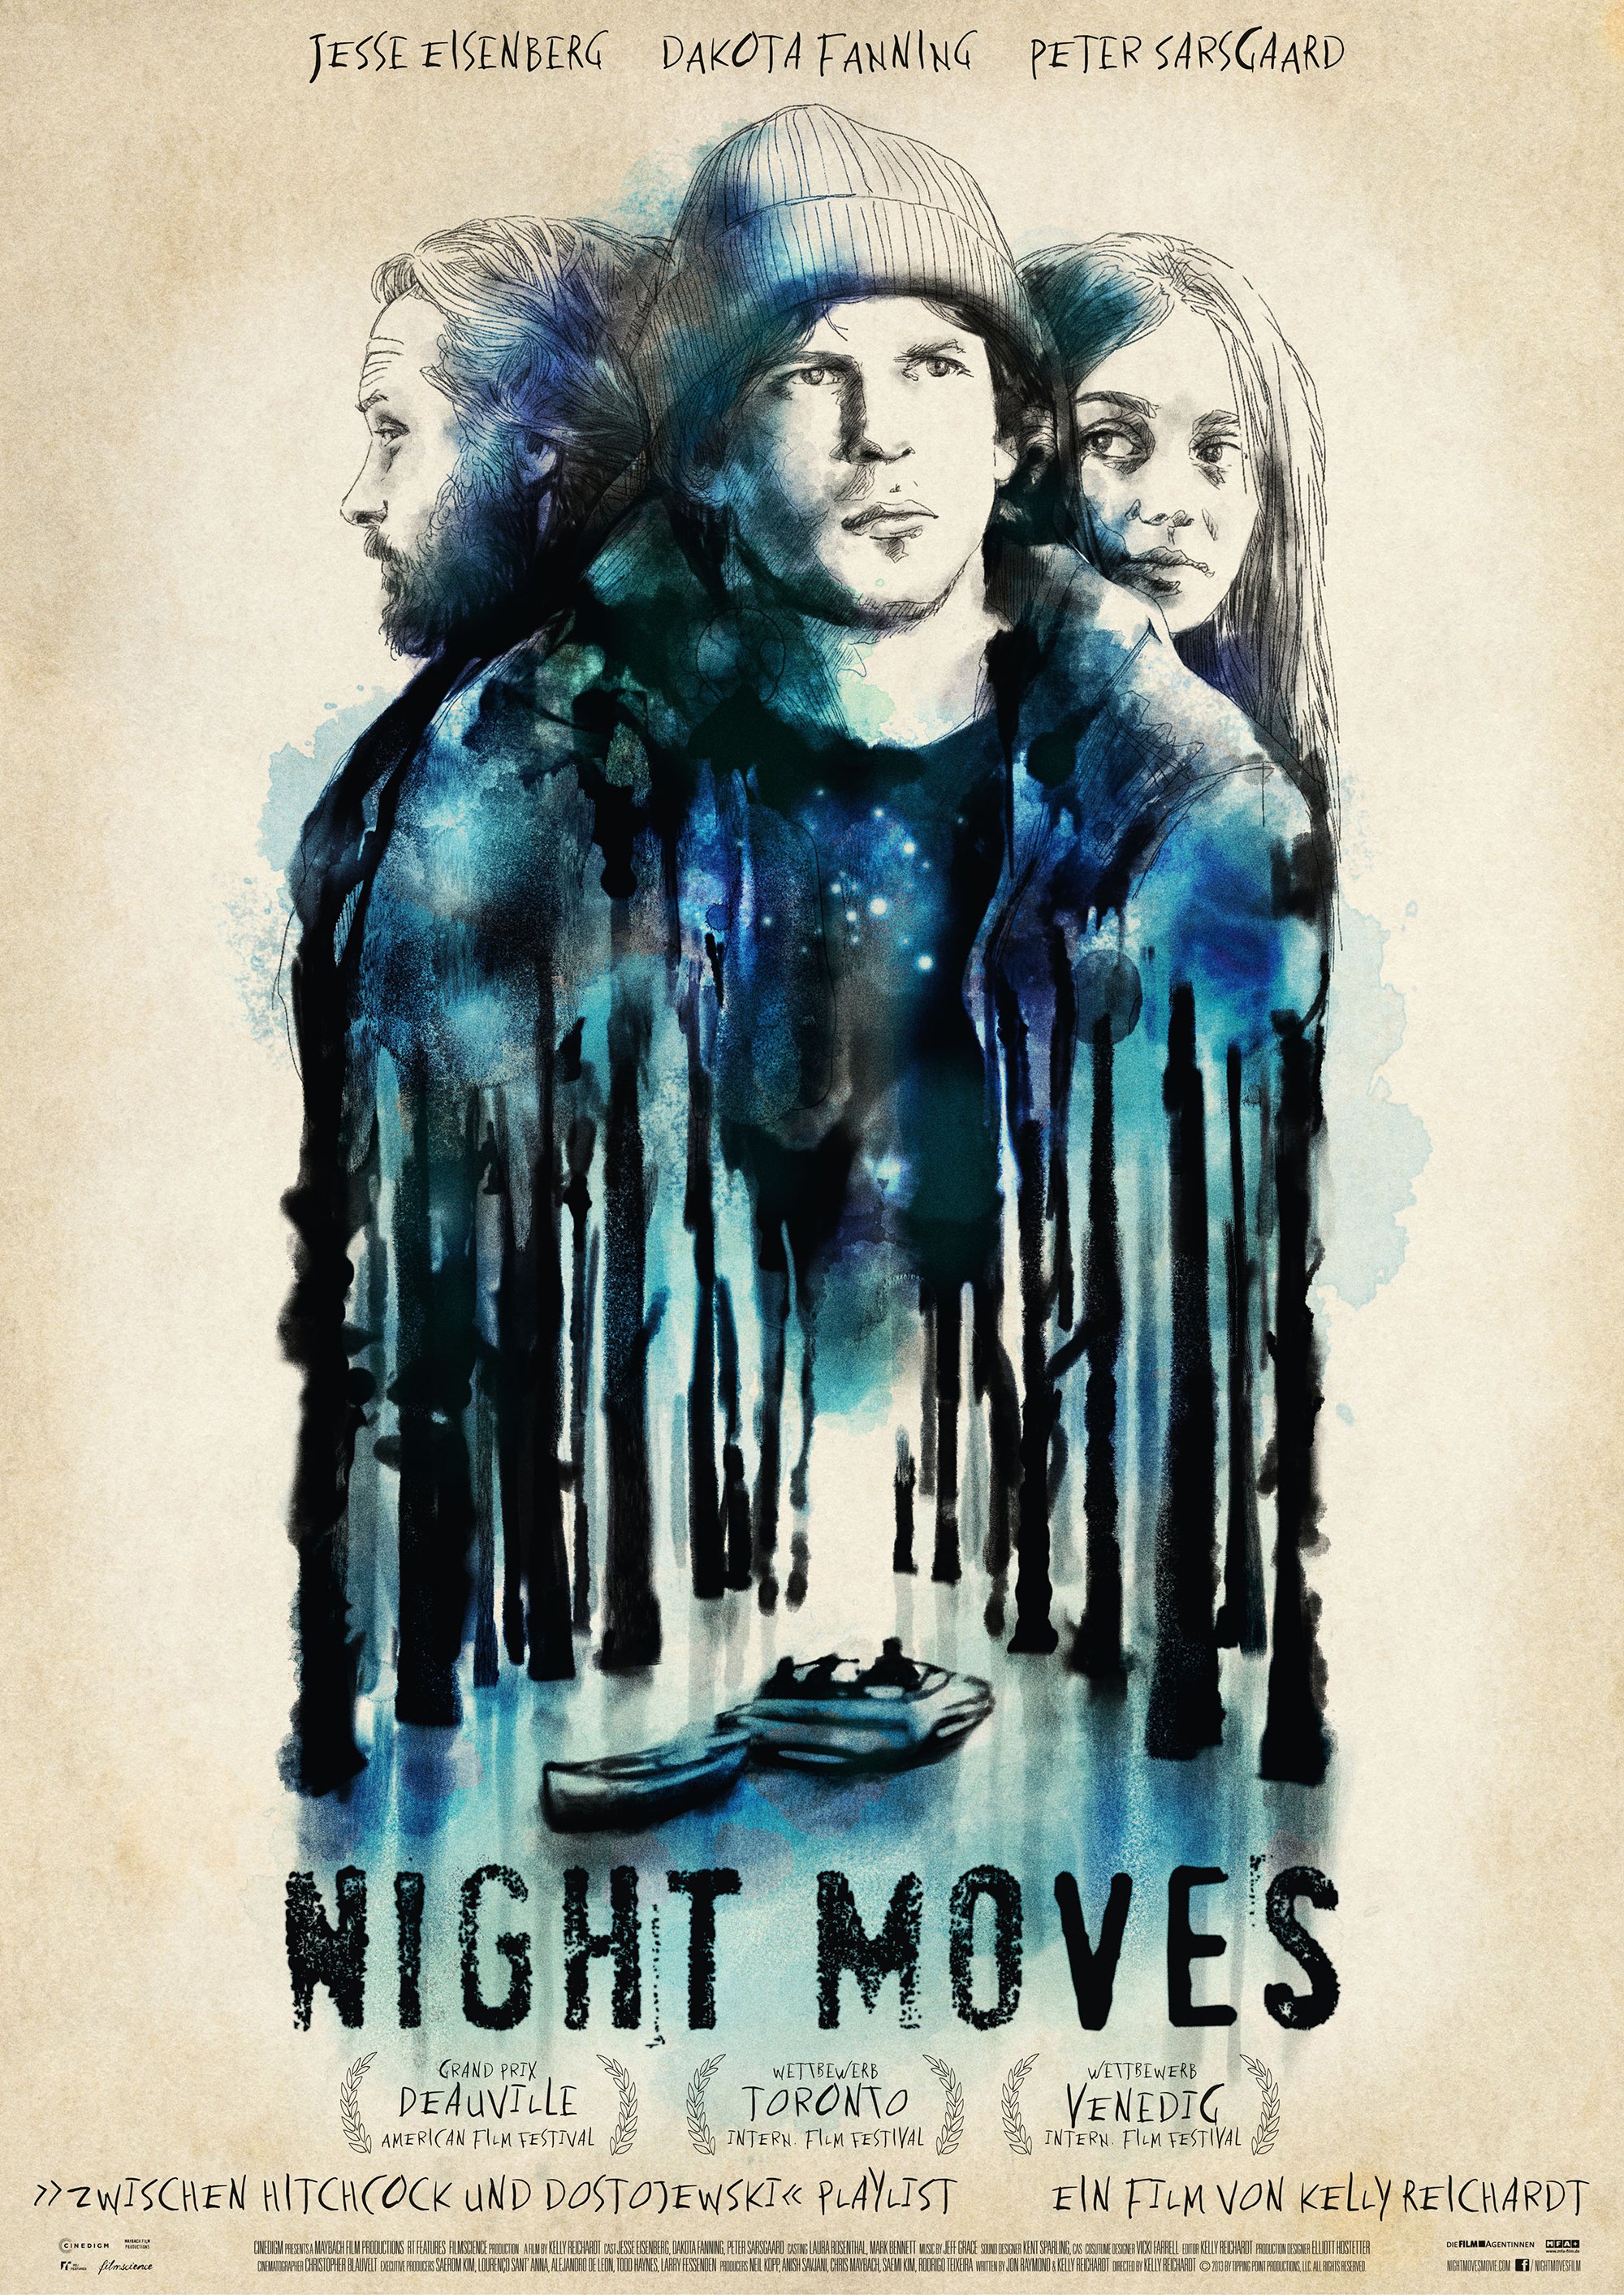 Plakat von "Night Moves"